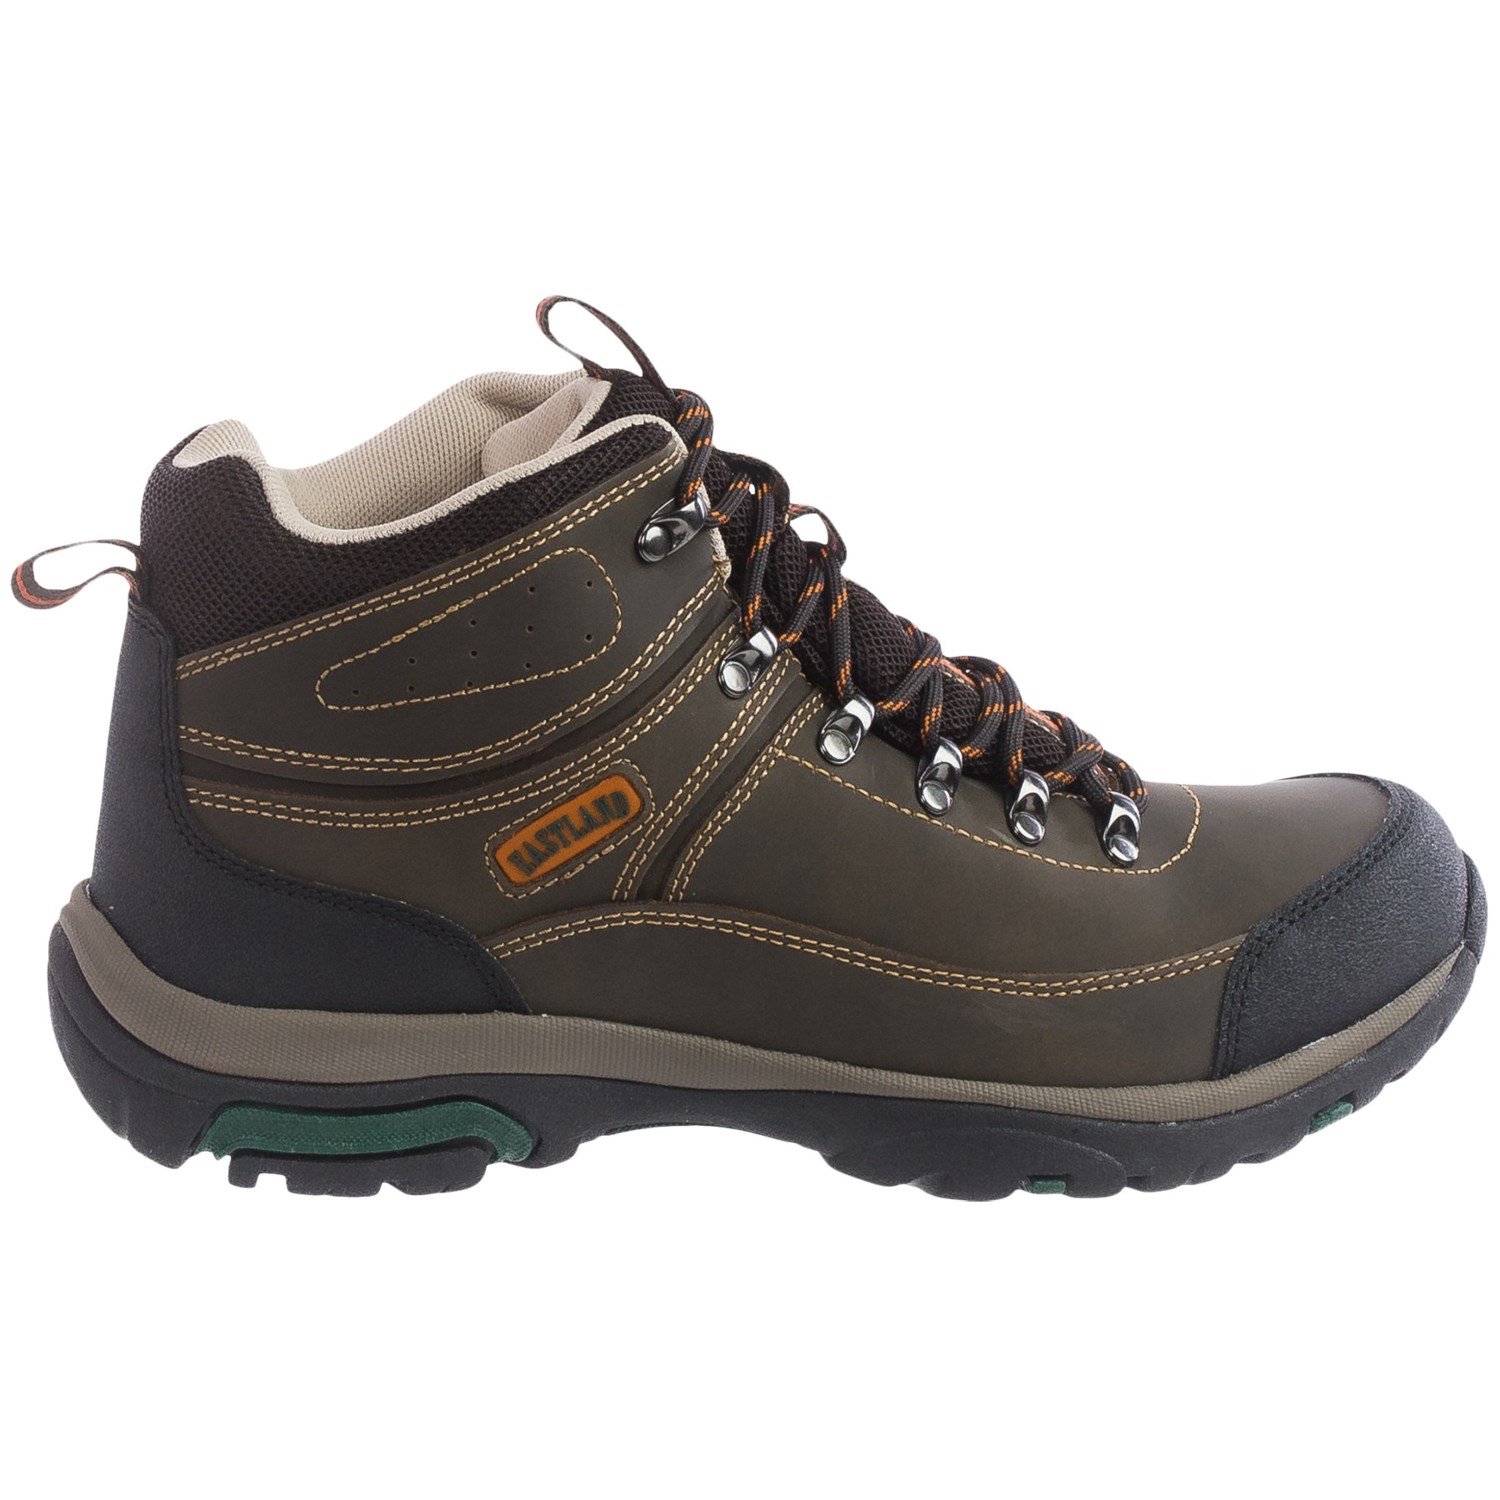 Eastland Rutland Hiking Boots (For Men) - Save 42%